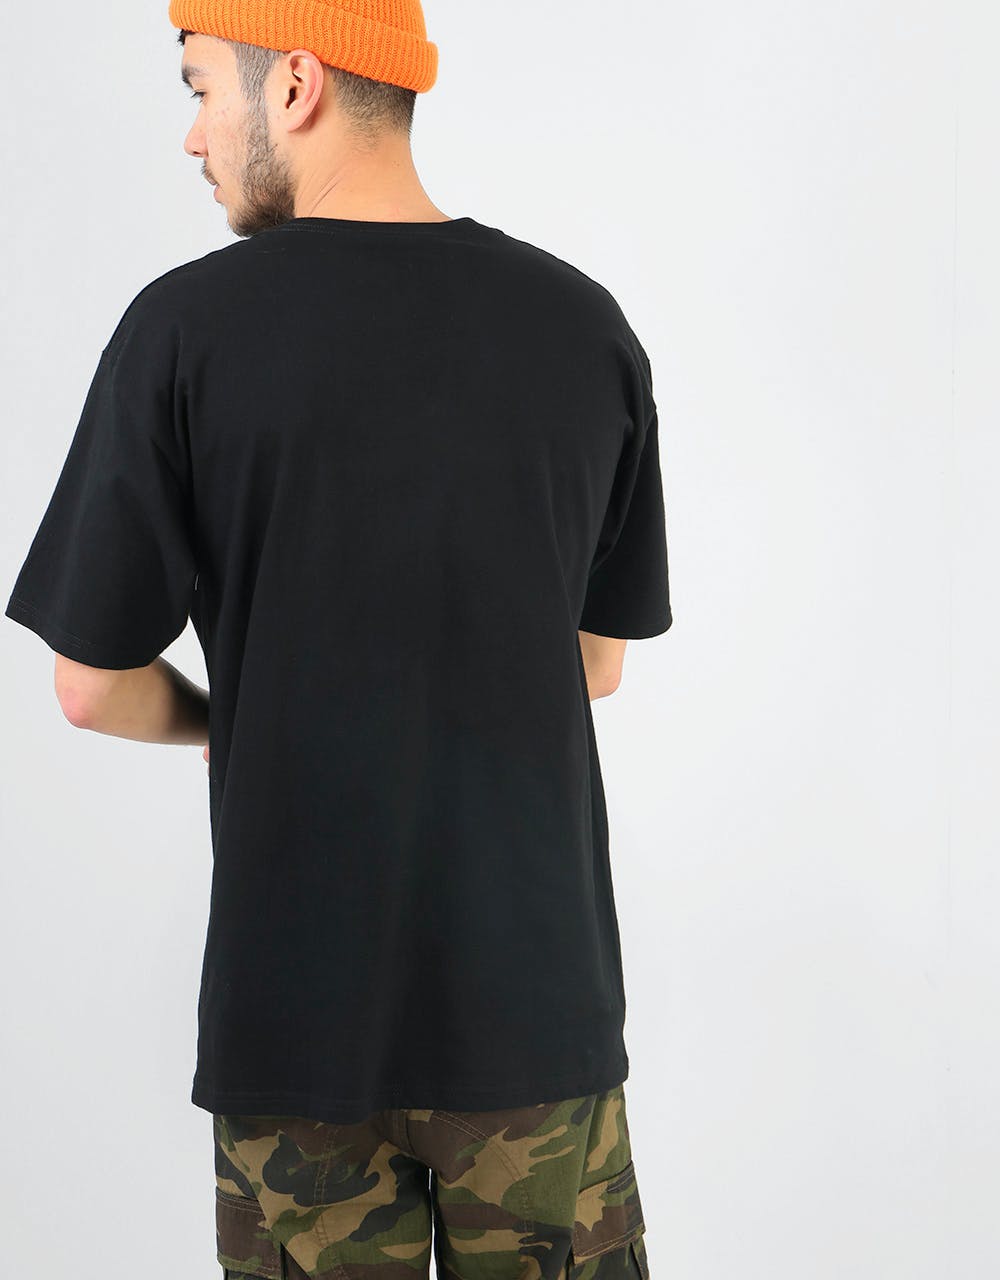 Spitfire Bighead Overlay T-Shirt - Black/Multi